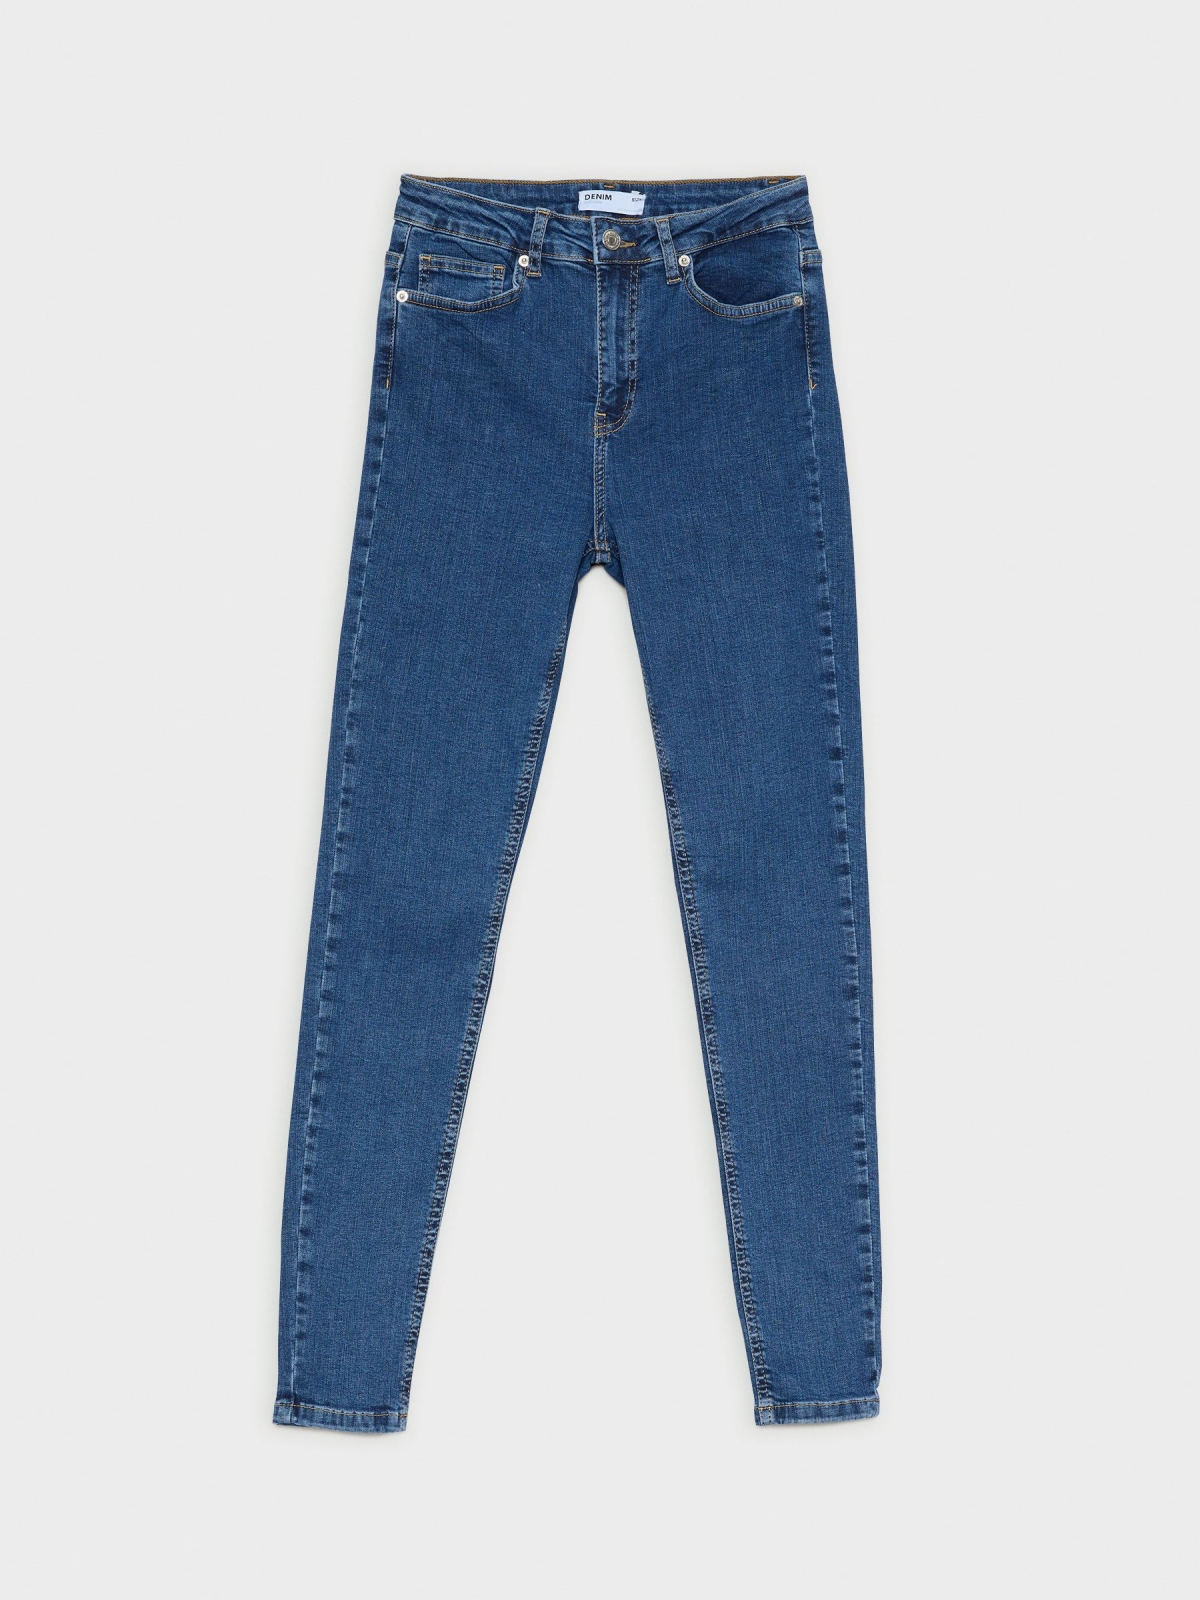  Jeans skinny básico cintura alta azul